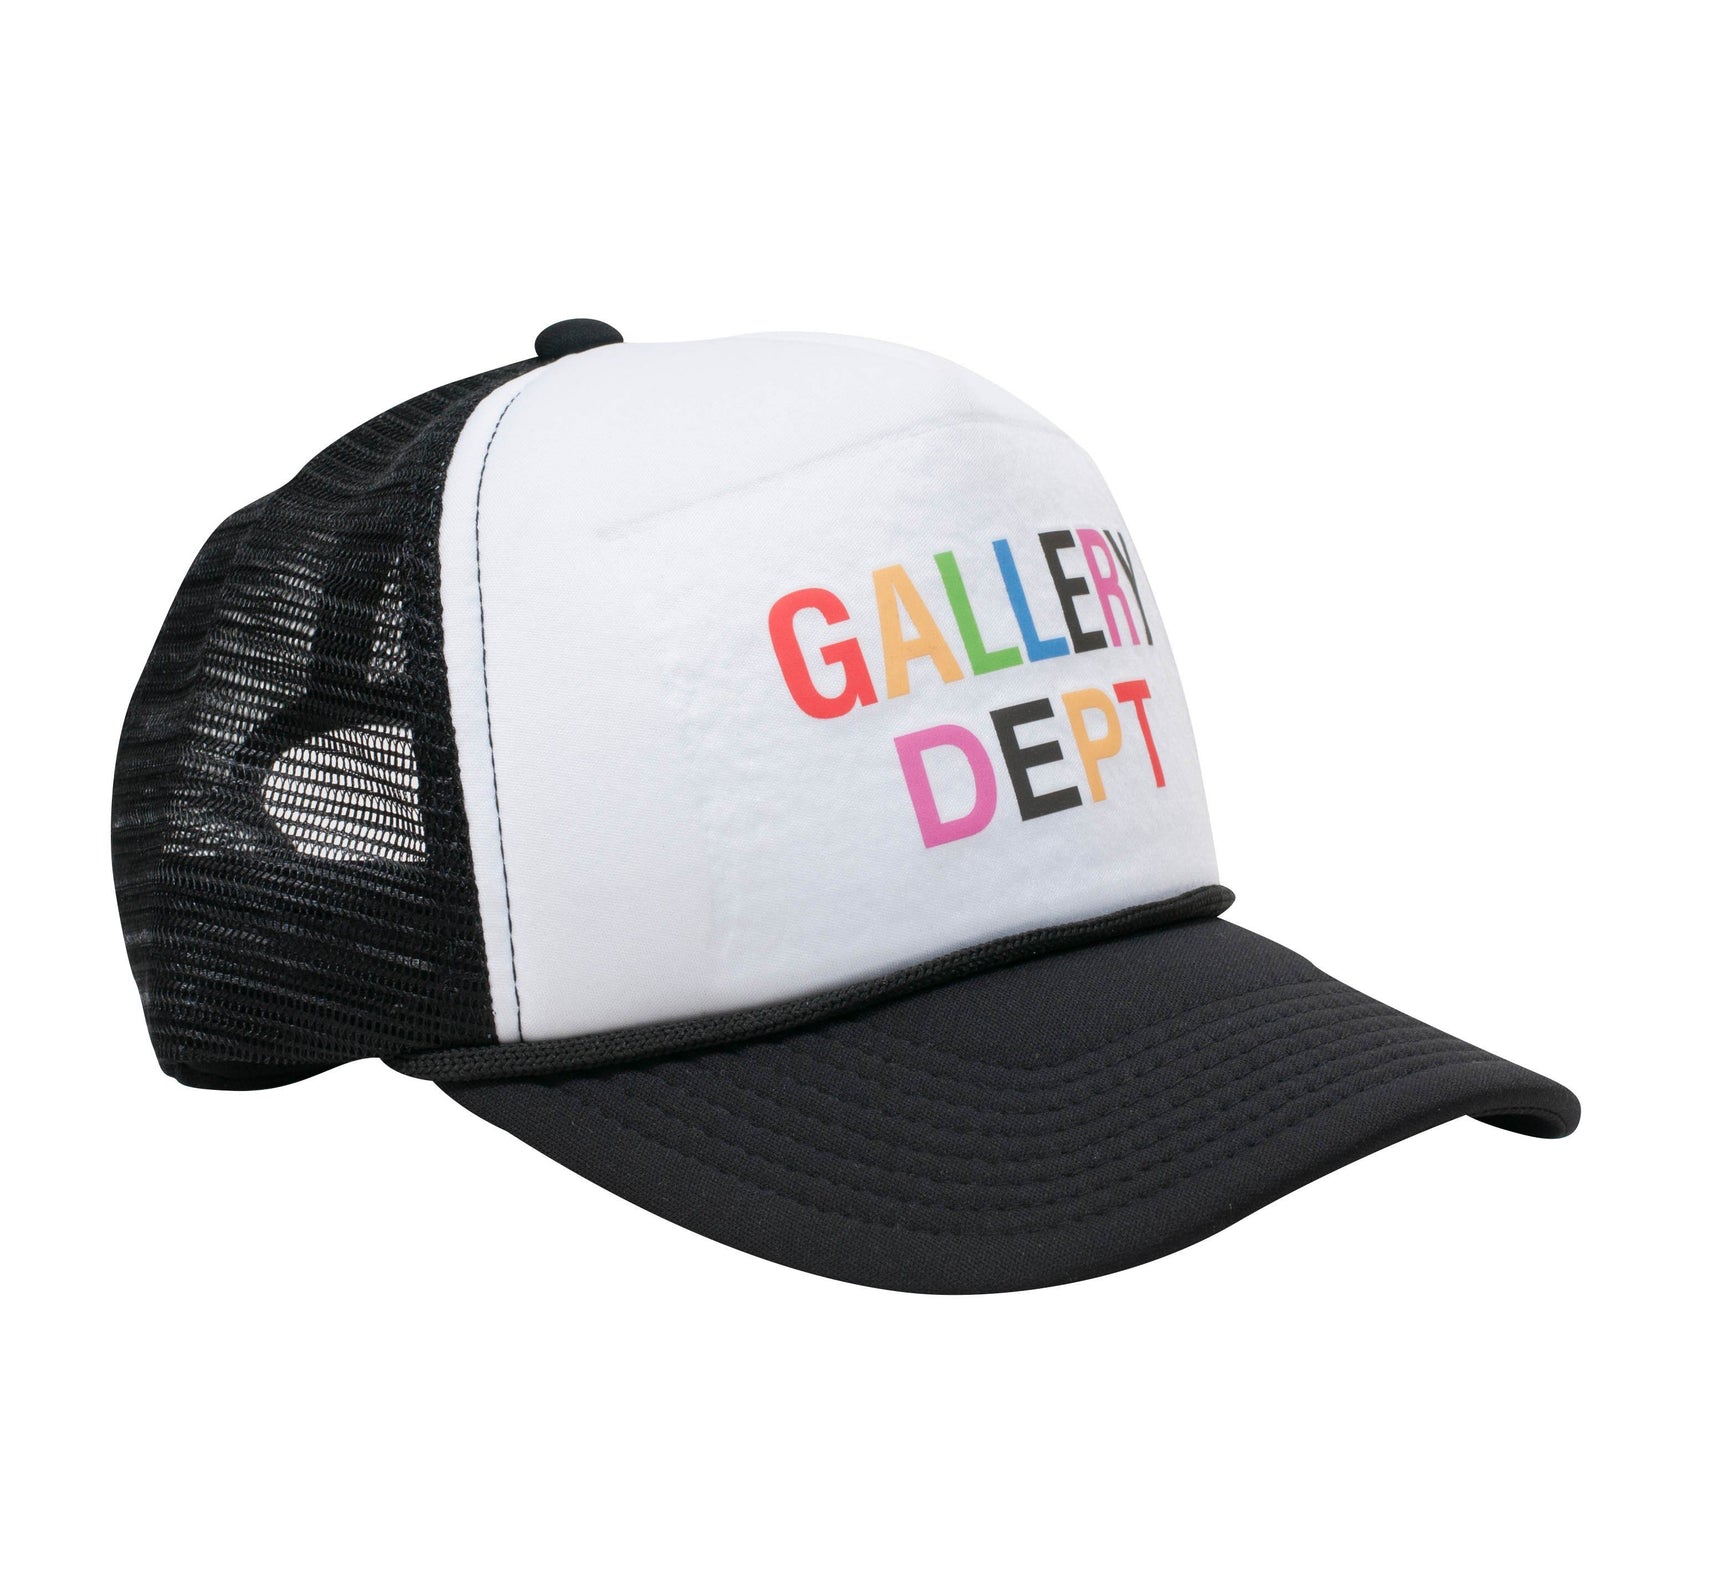 Gallery Dept. Beverly Hills Trucker Hat Black/White - JP